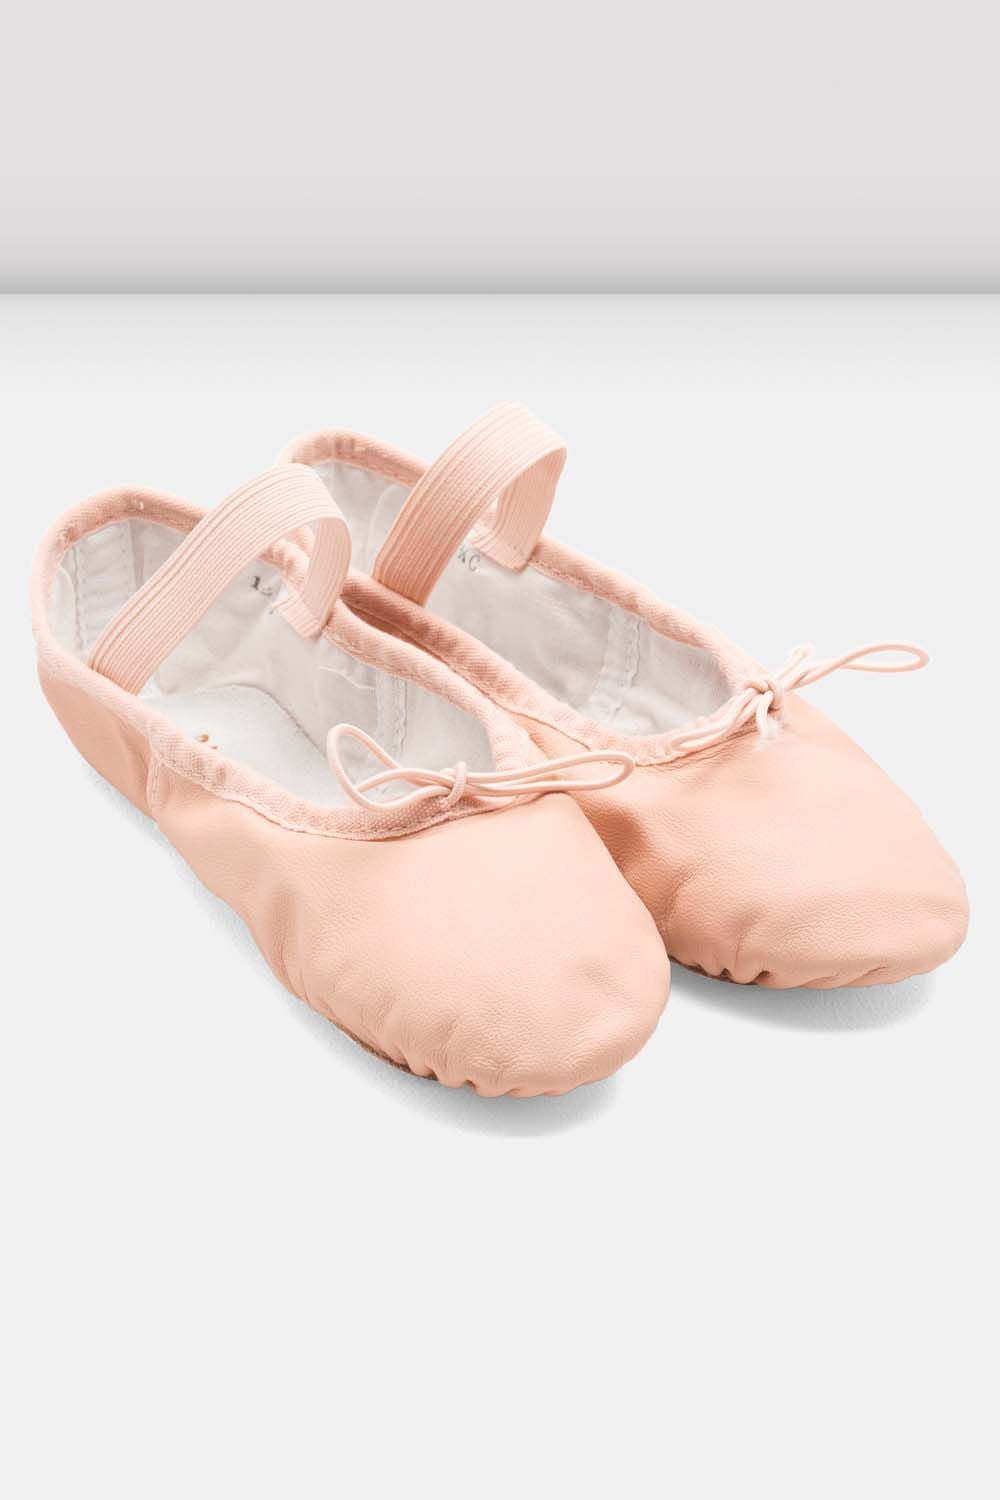 Childrens Dansoft Leather Shoes, Pink – BLOCH Dance US